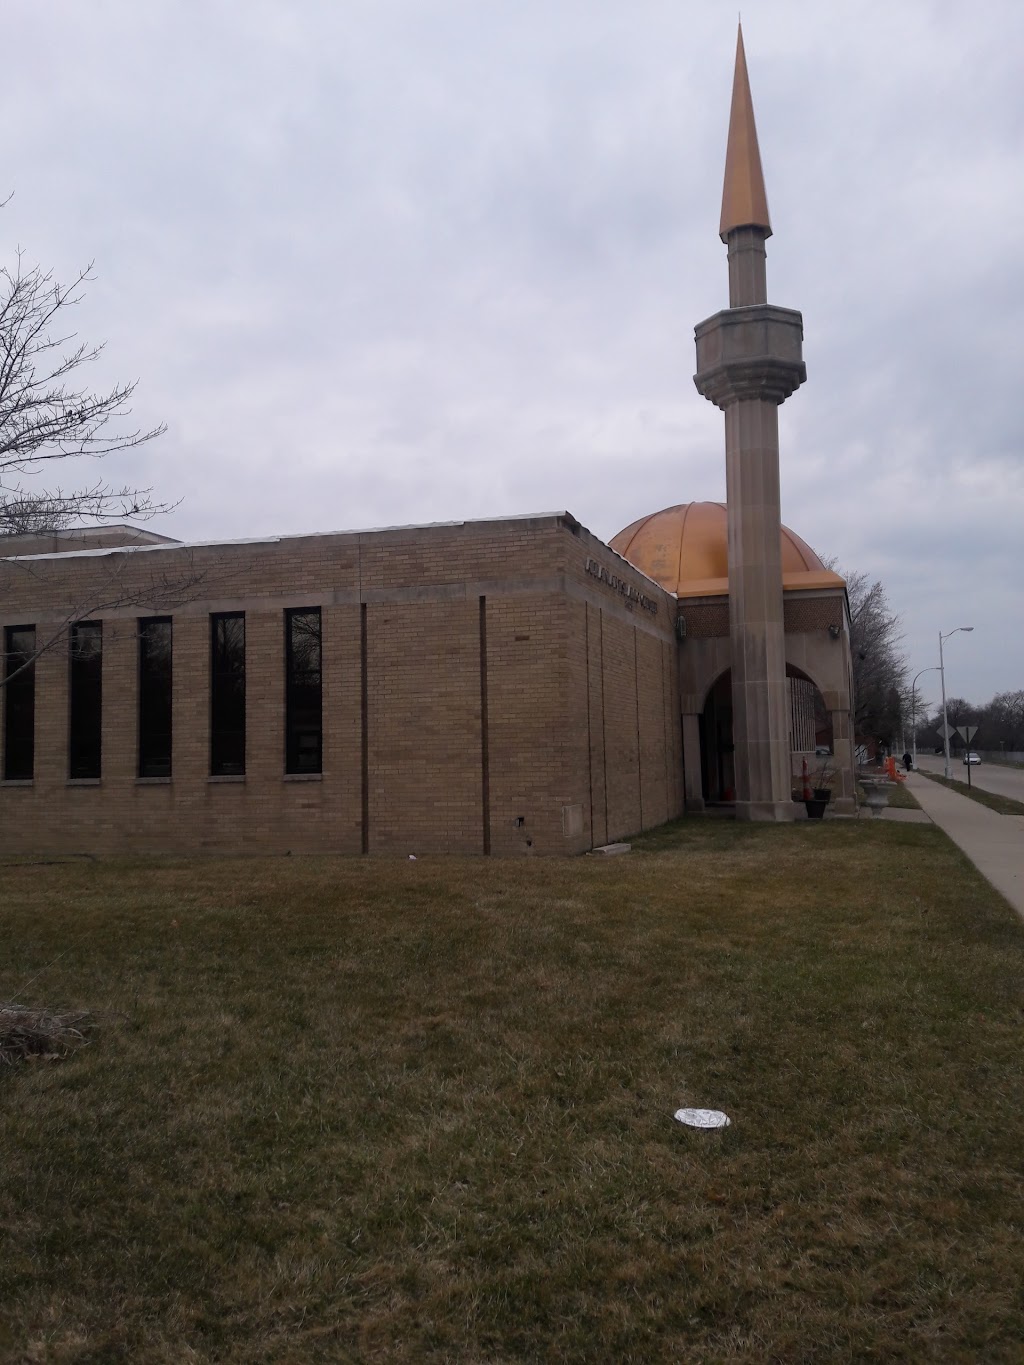 Albanian Islamic Center of Michigan | 19775 Harper Ave, Harper Woods, MI 48225, USA | Phone: (313) 884-6676